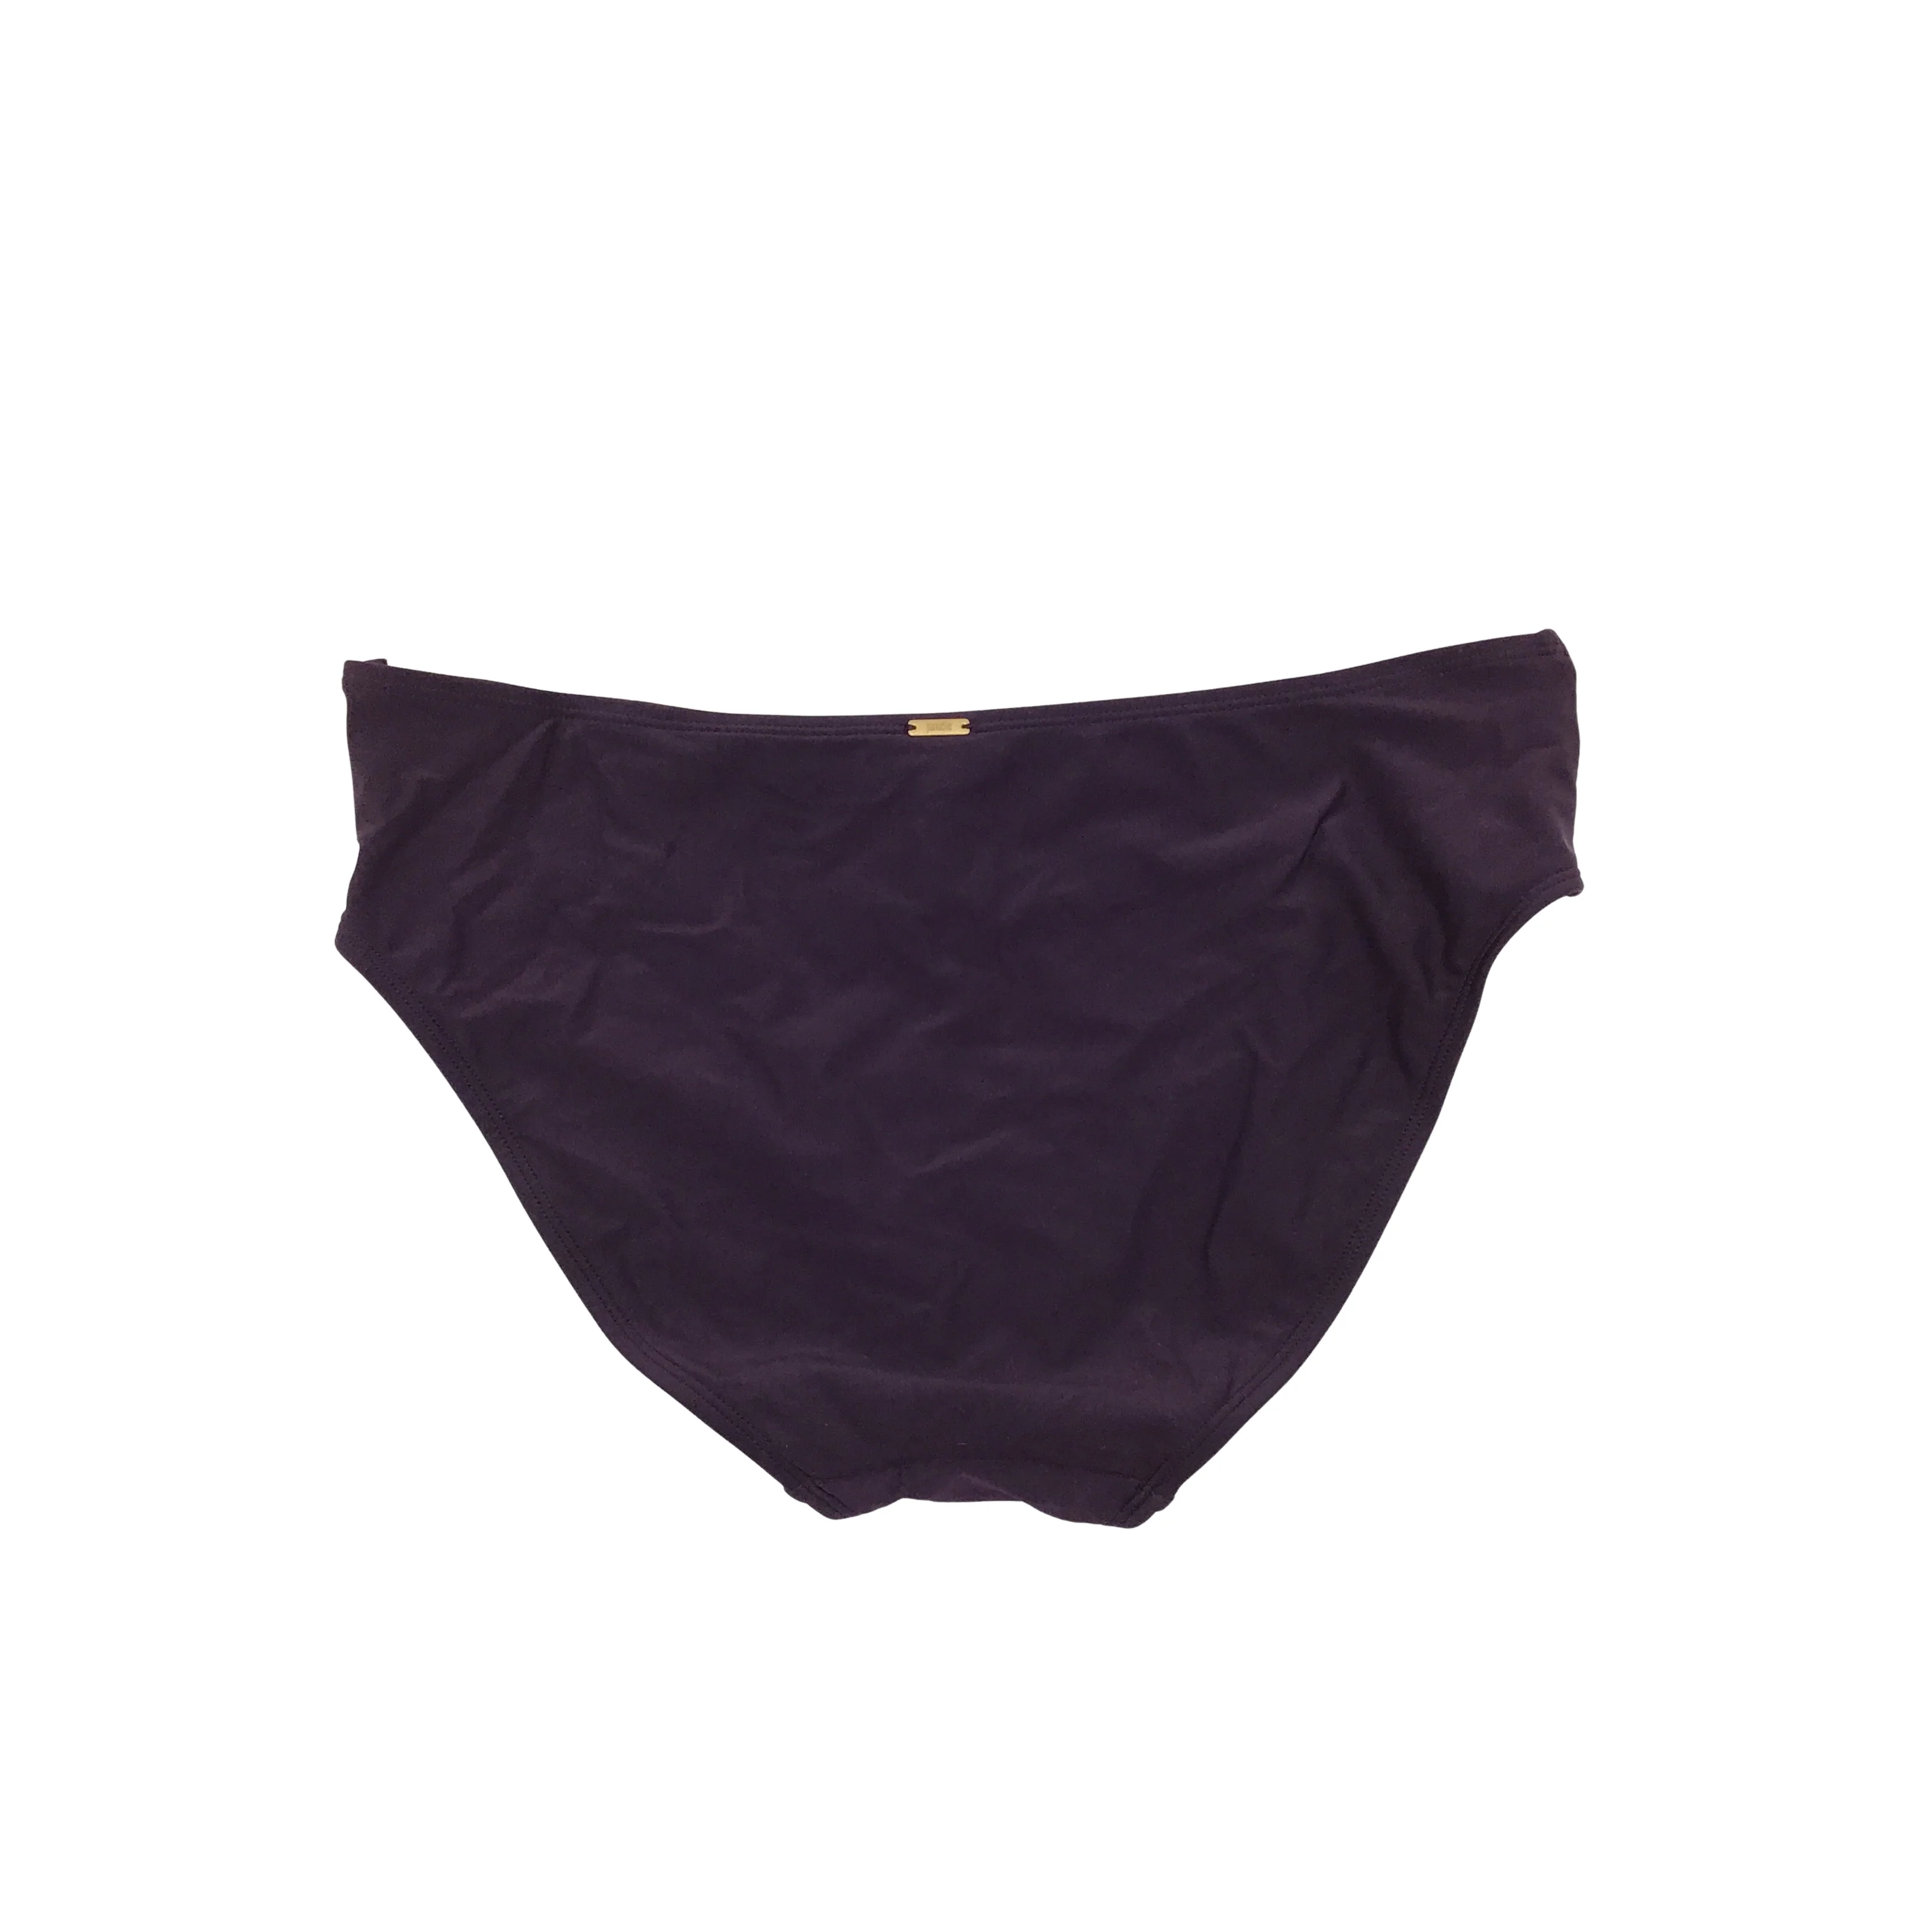 Panache Women's Bathing Suit: Bottoms/ Purple/ White / Medium